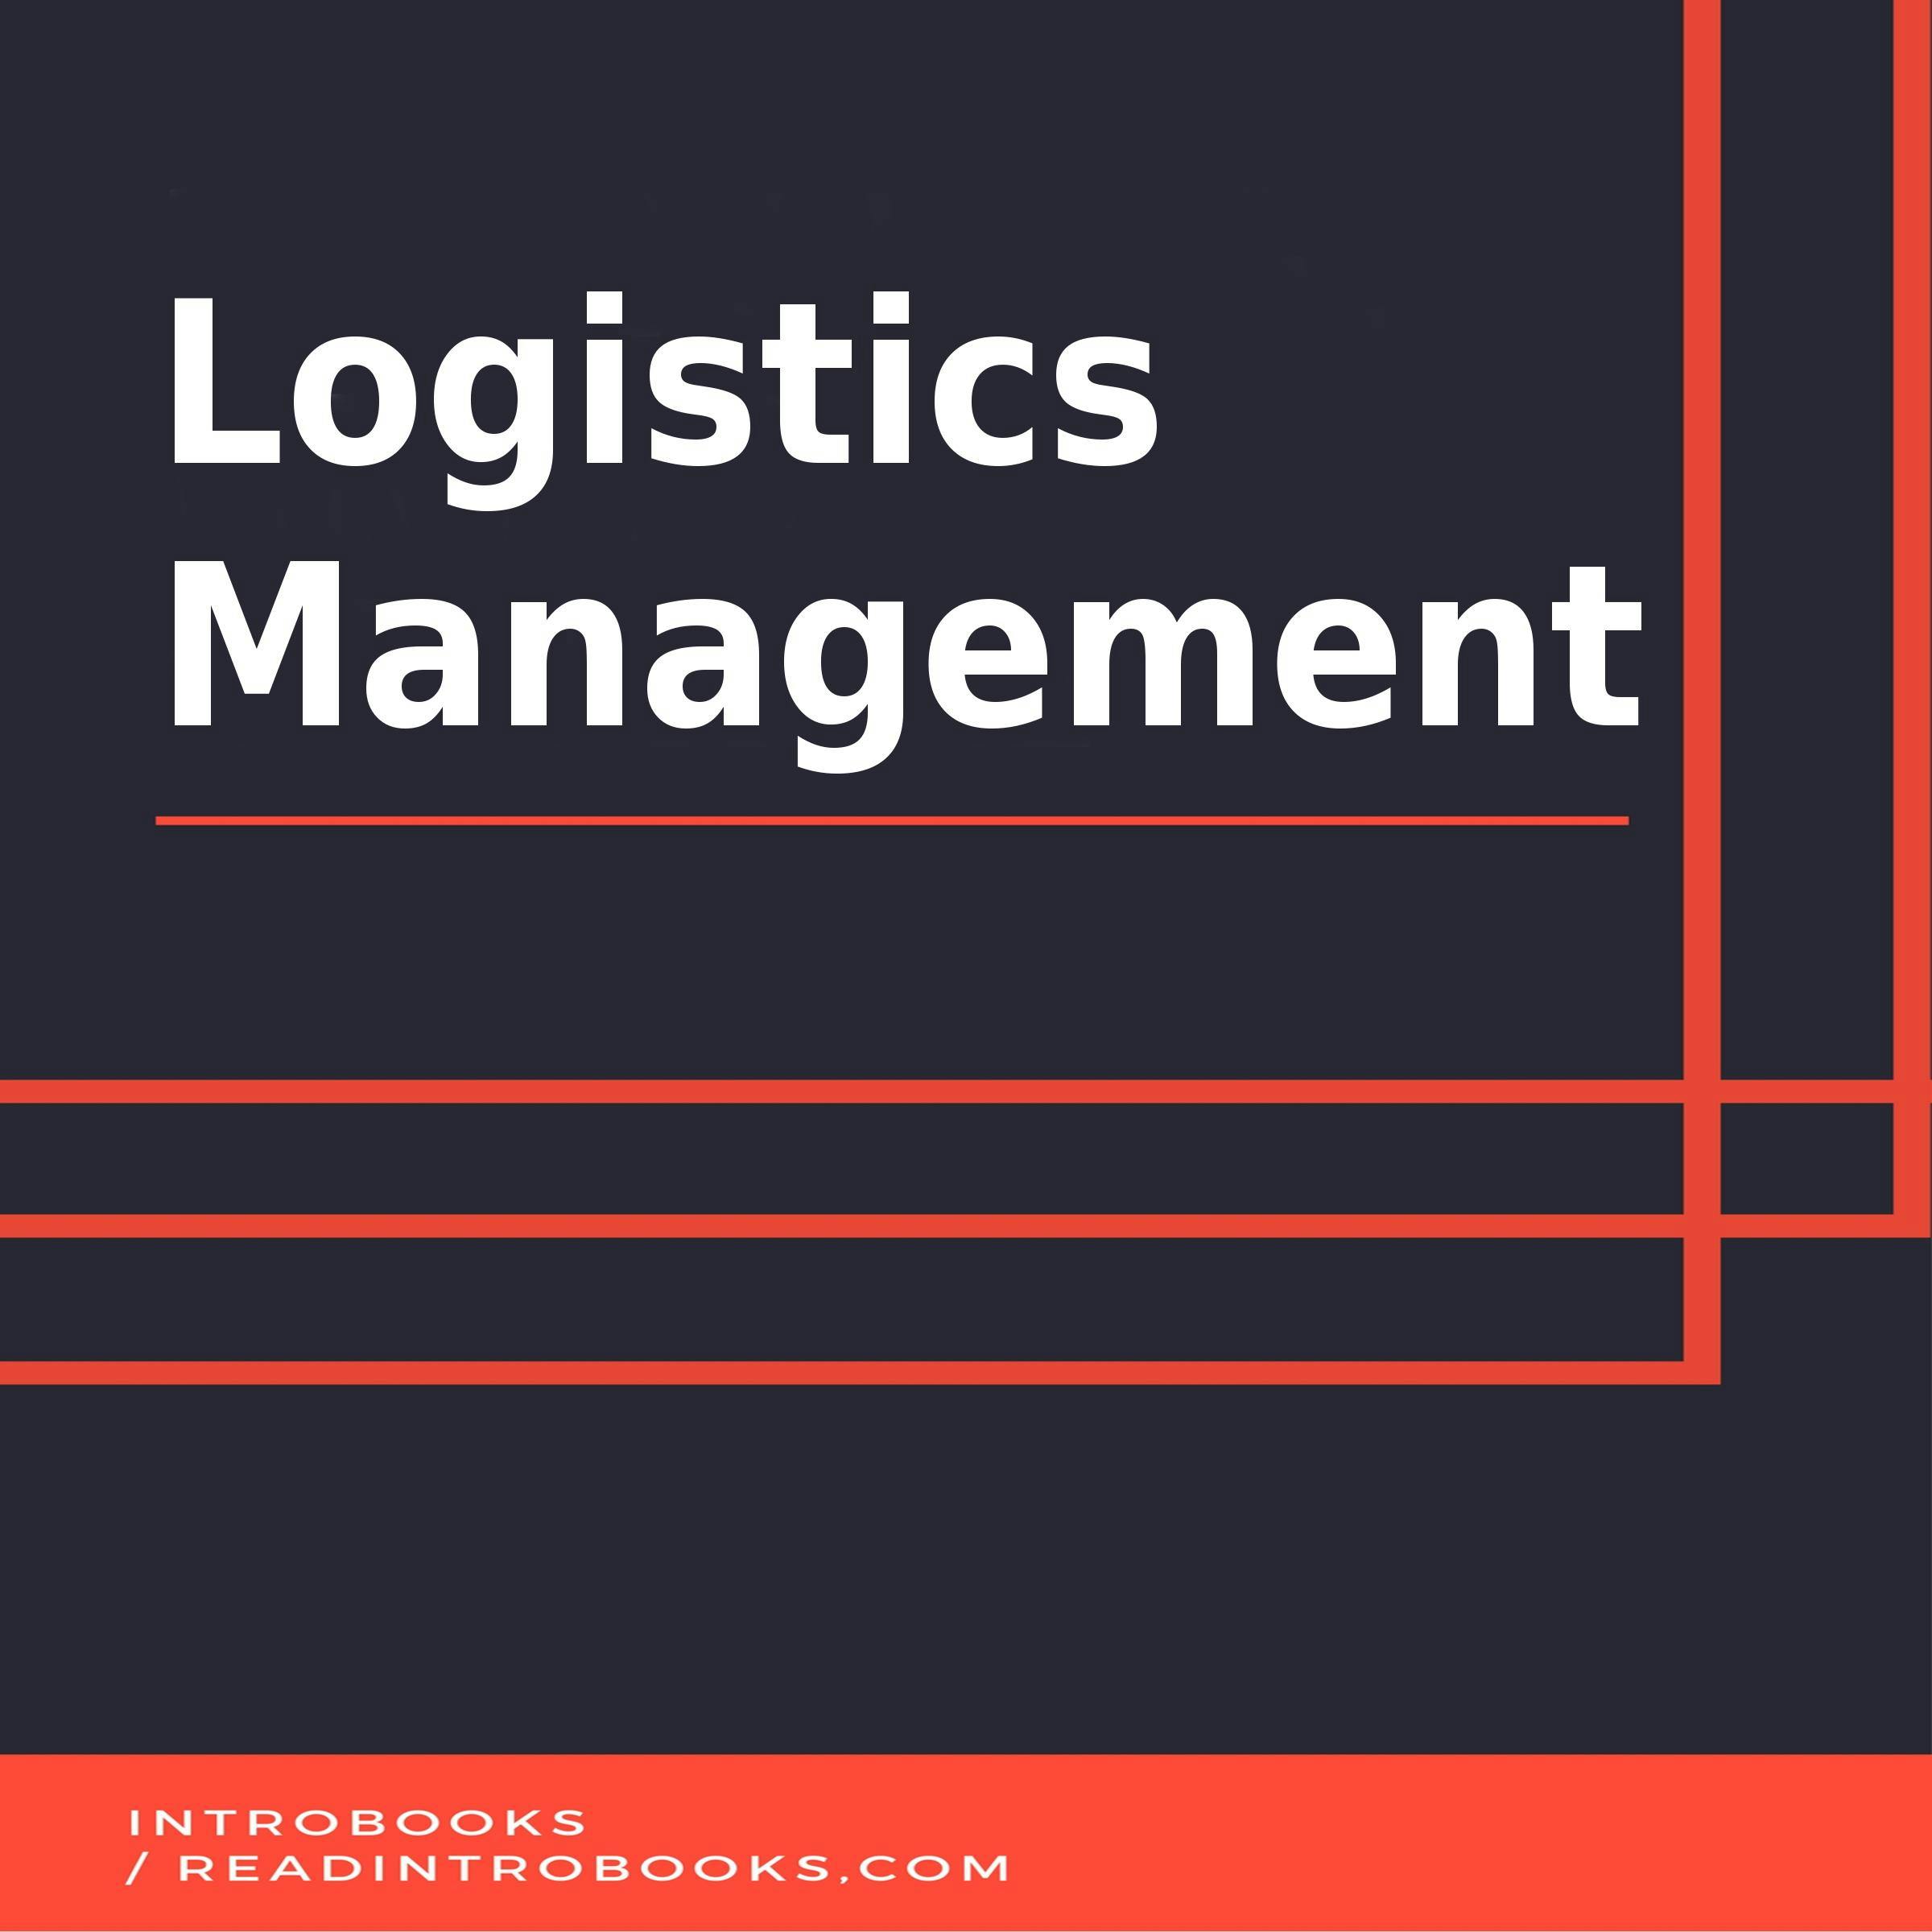 Logistics Management - undefined